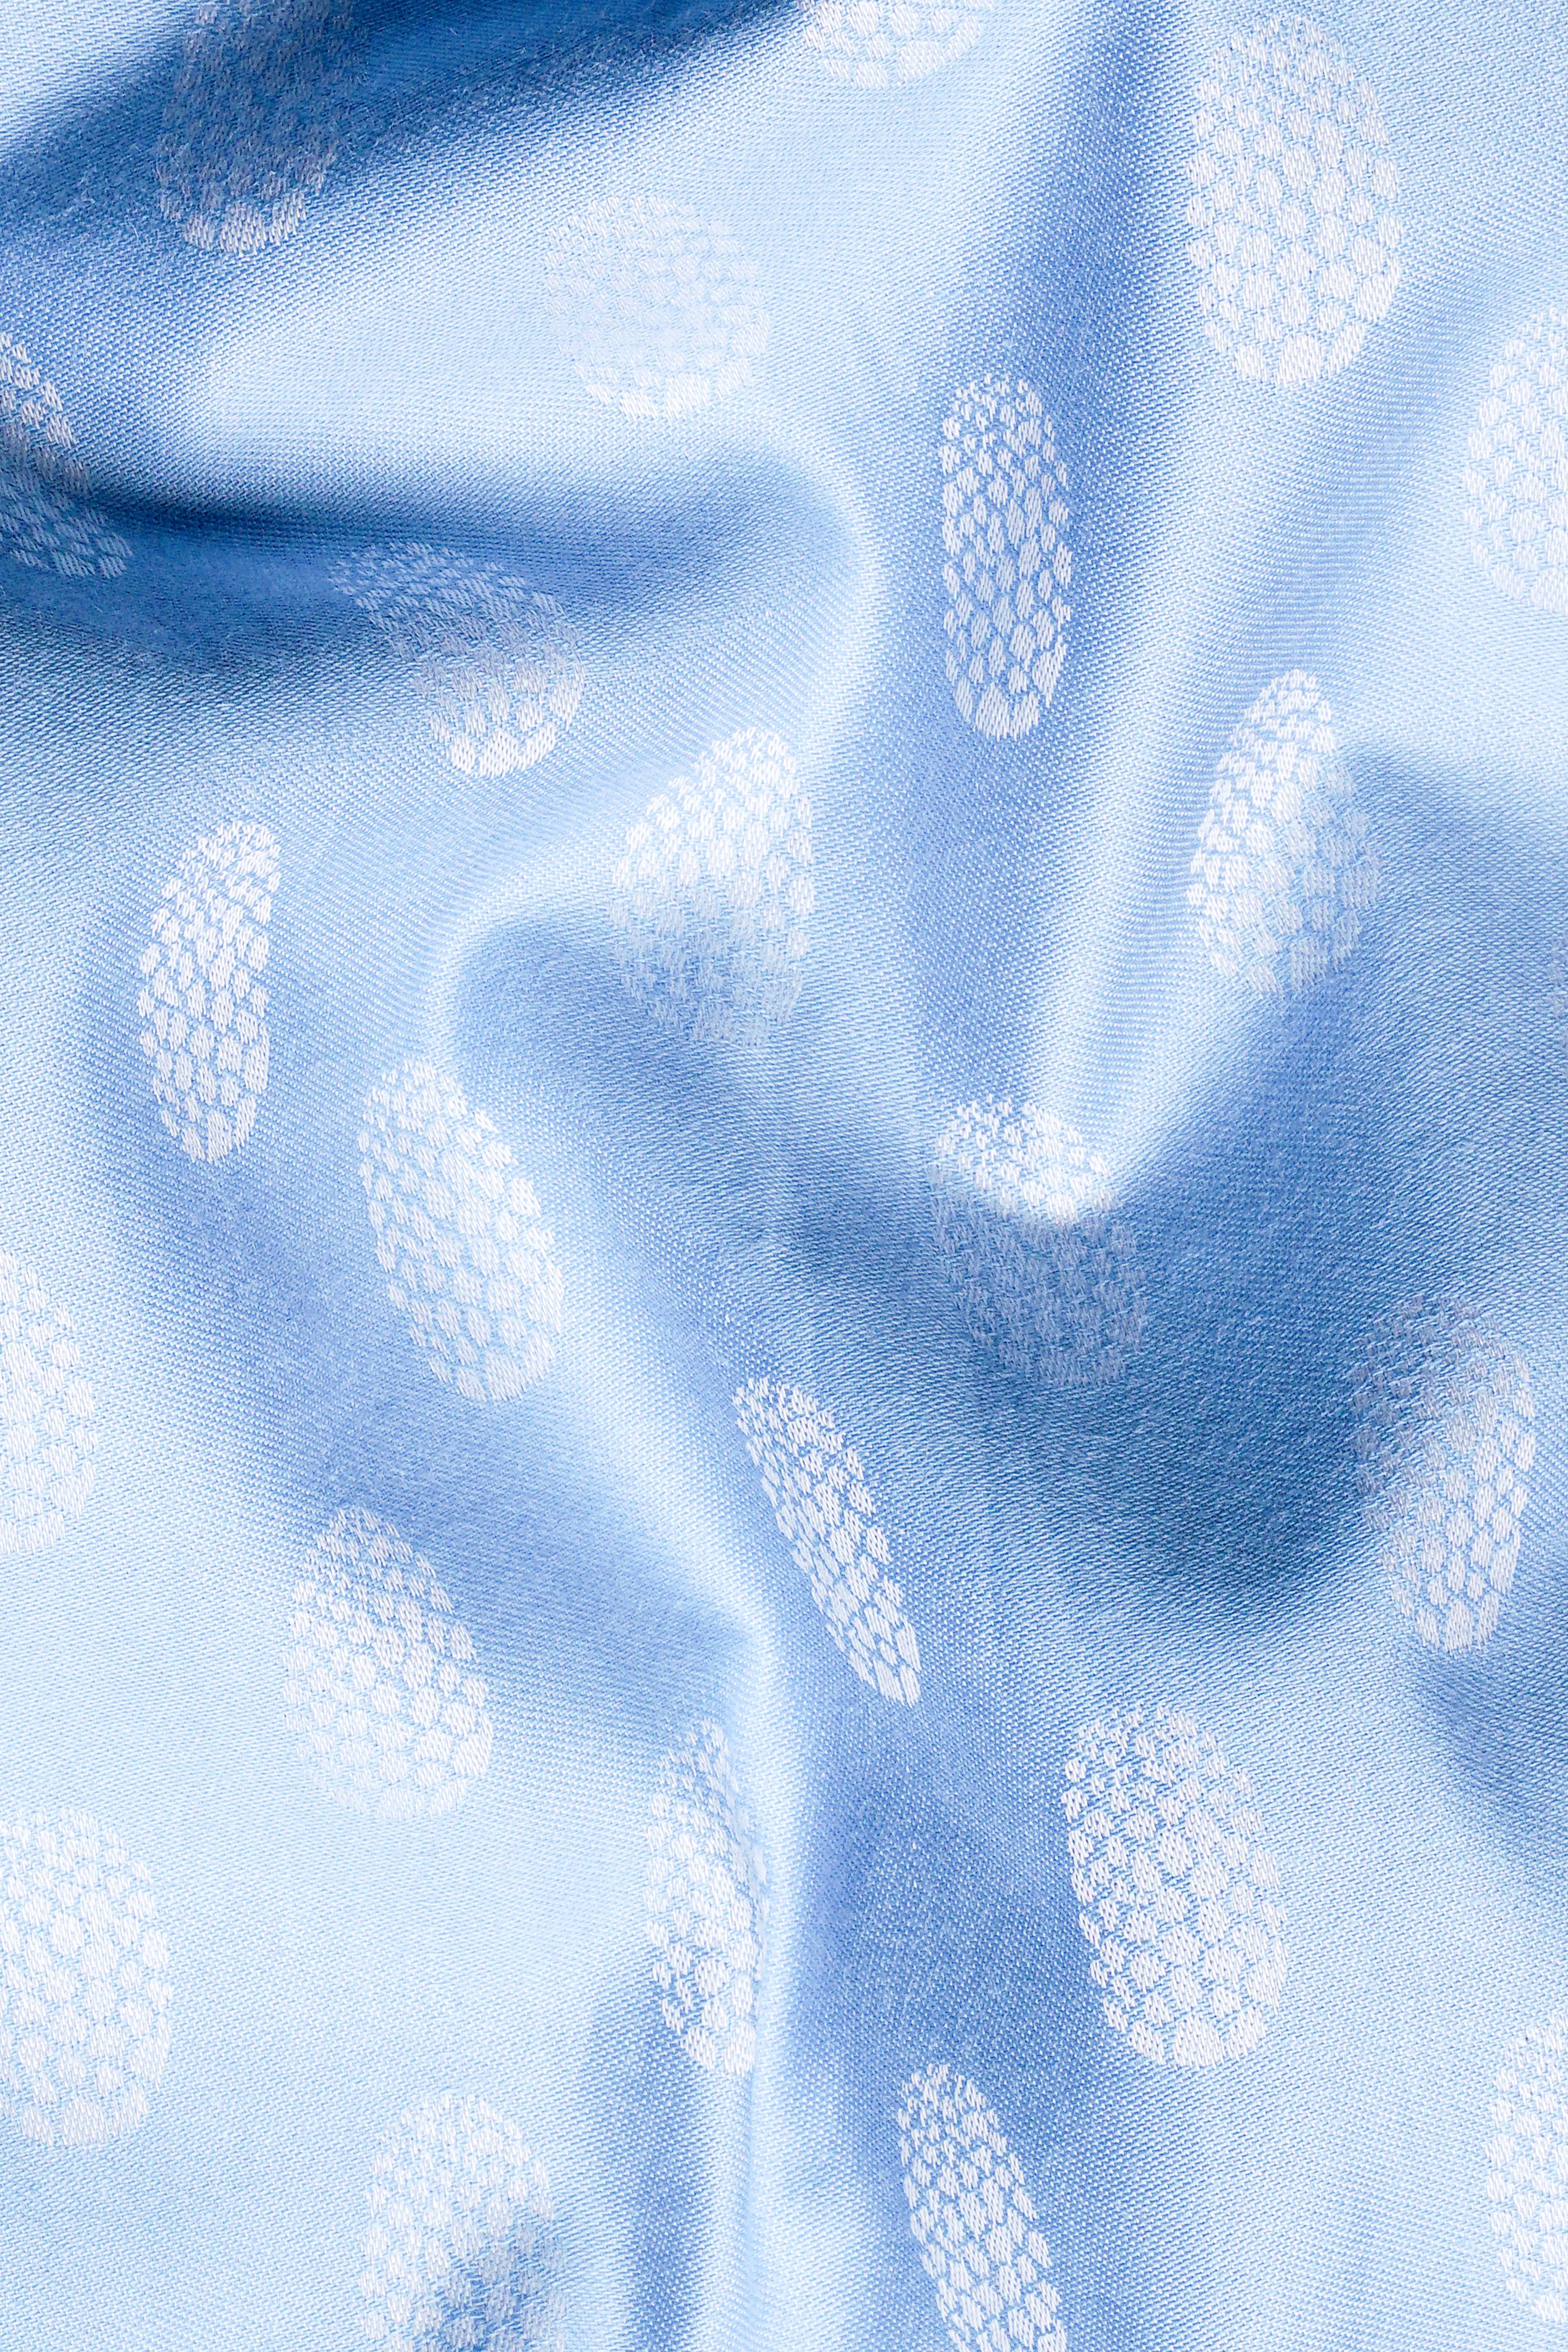 Cerulean Blue Oval Jacquard Textured Premium Giza Cotton Shirt